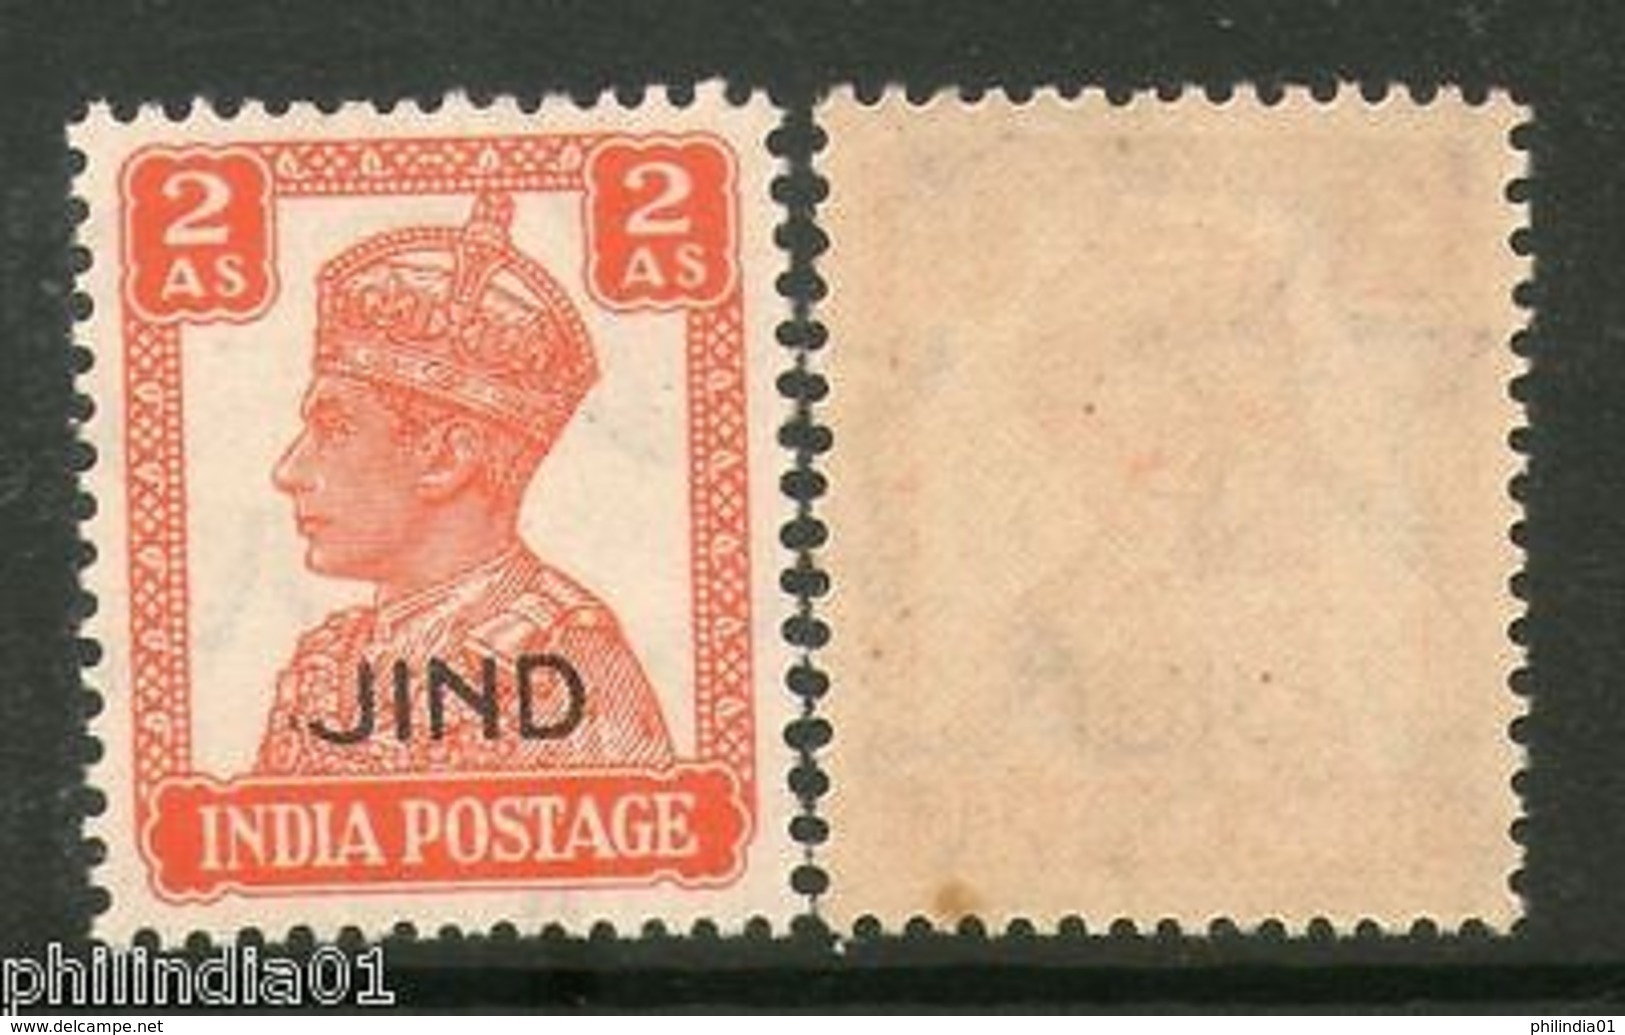 India JIND /JHIND / JEEND State KG VI 2As SG 143 / Sc 171 Postage MNH - Jhind